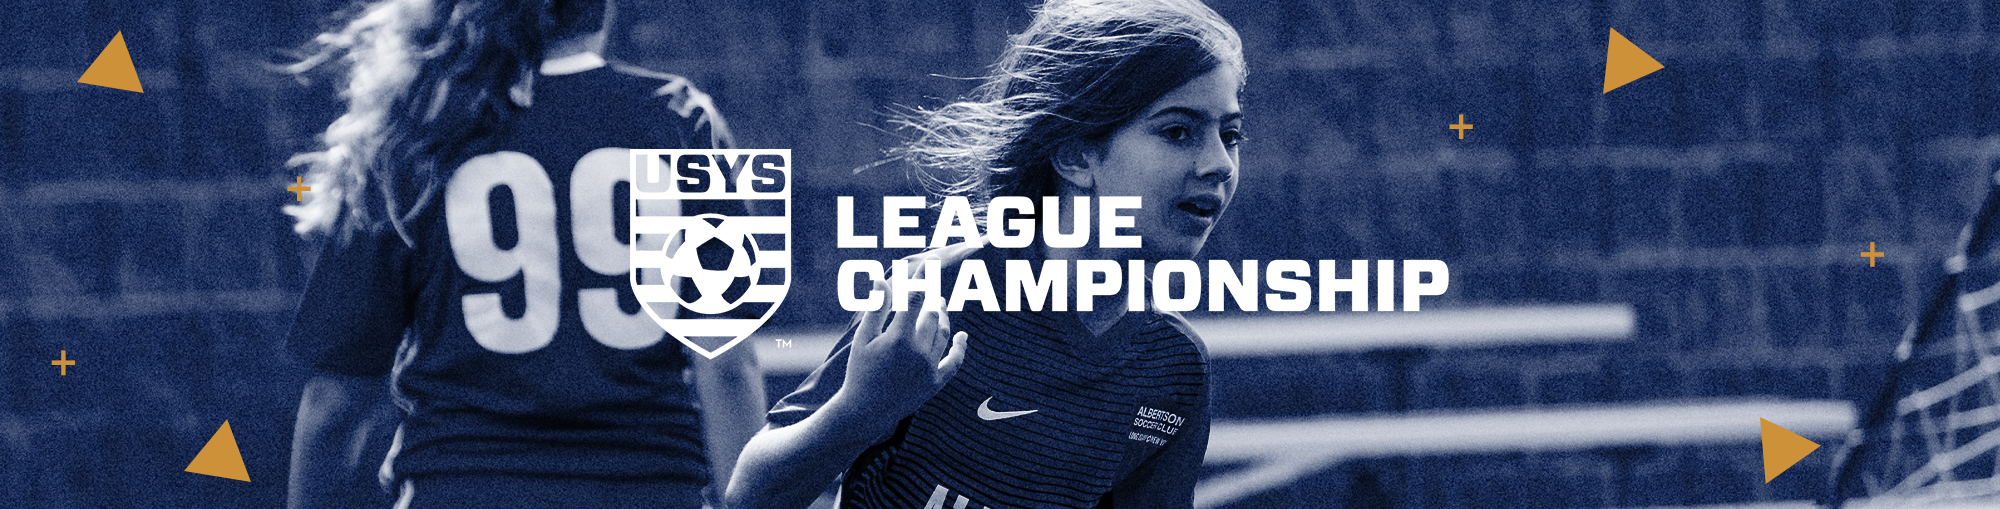 LIJSL league championship teams kickoff headline